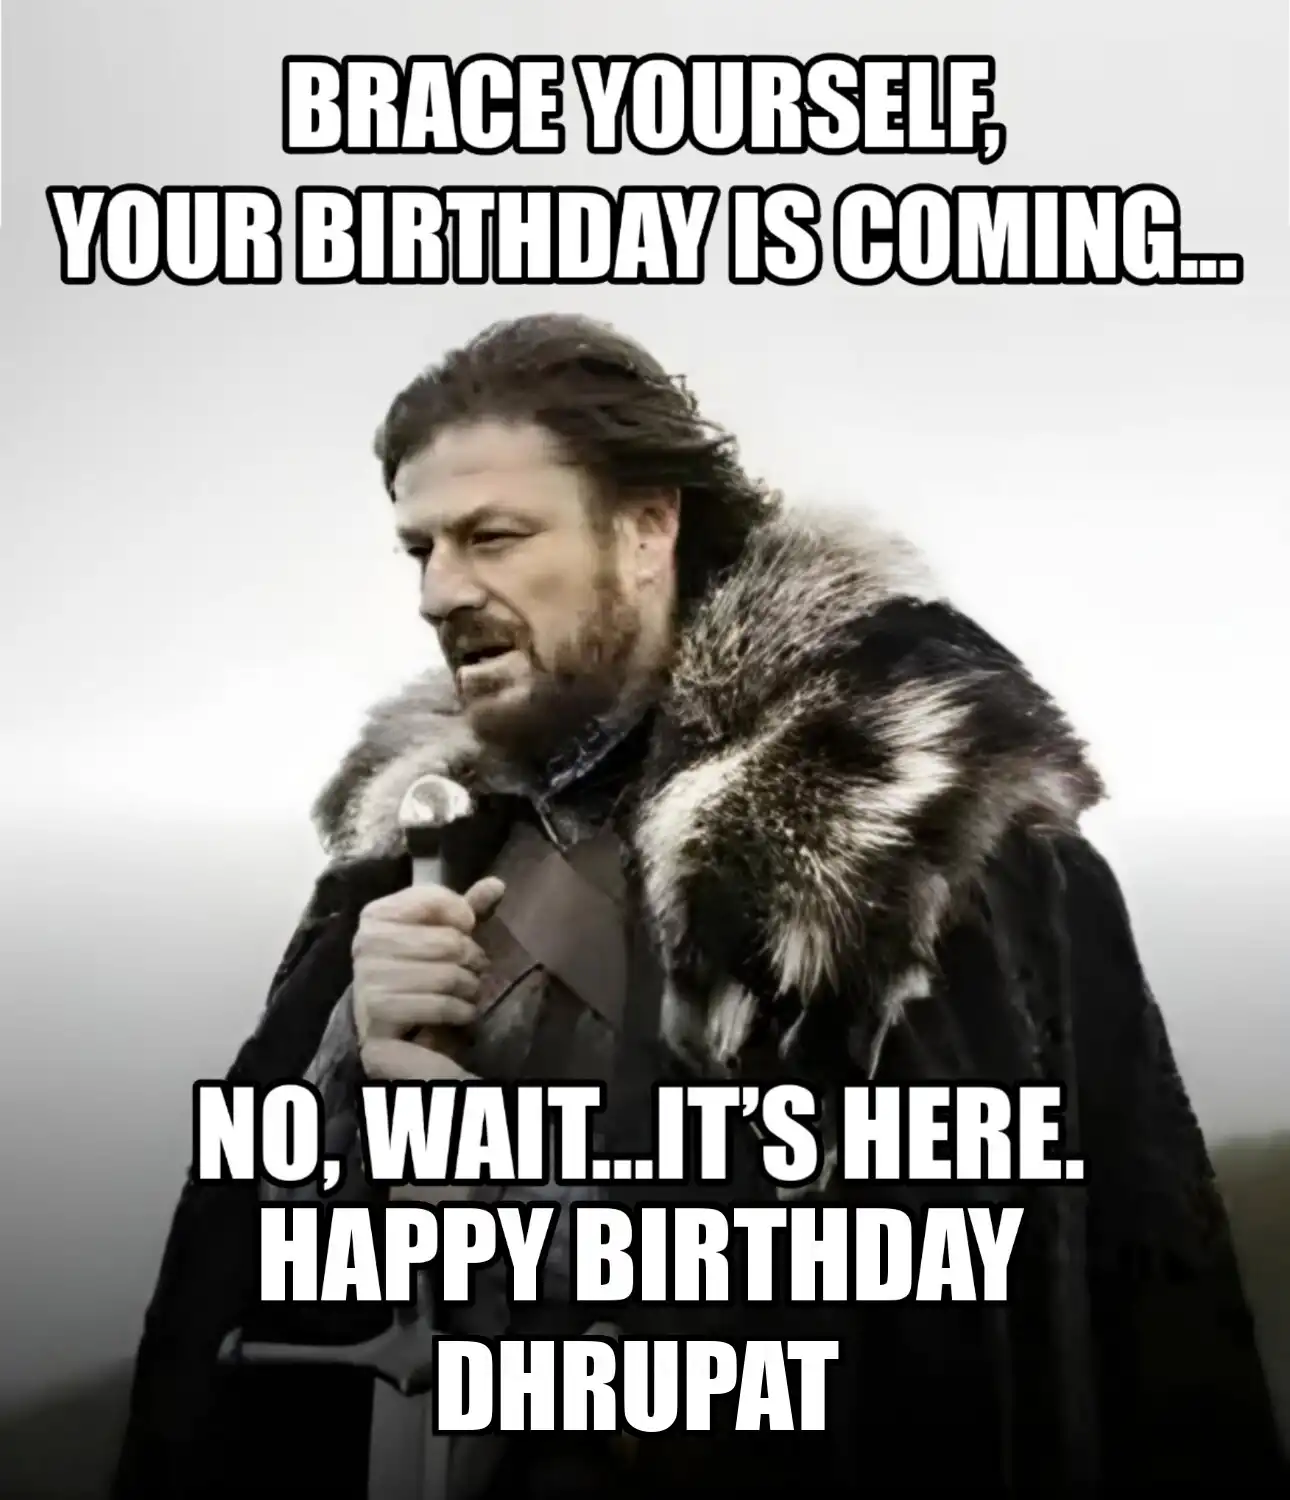 Happy Birthday Dhrupat Brace Yourself Your Birthday Is Coming Meme